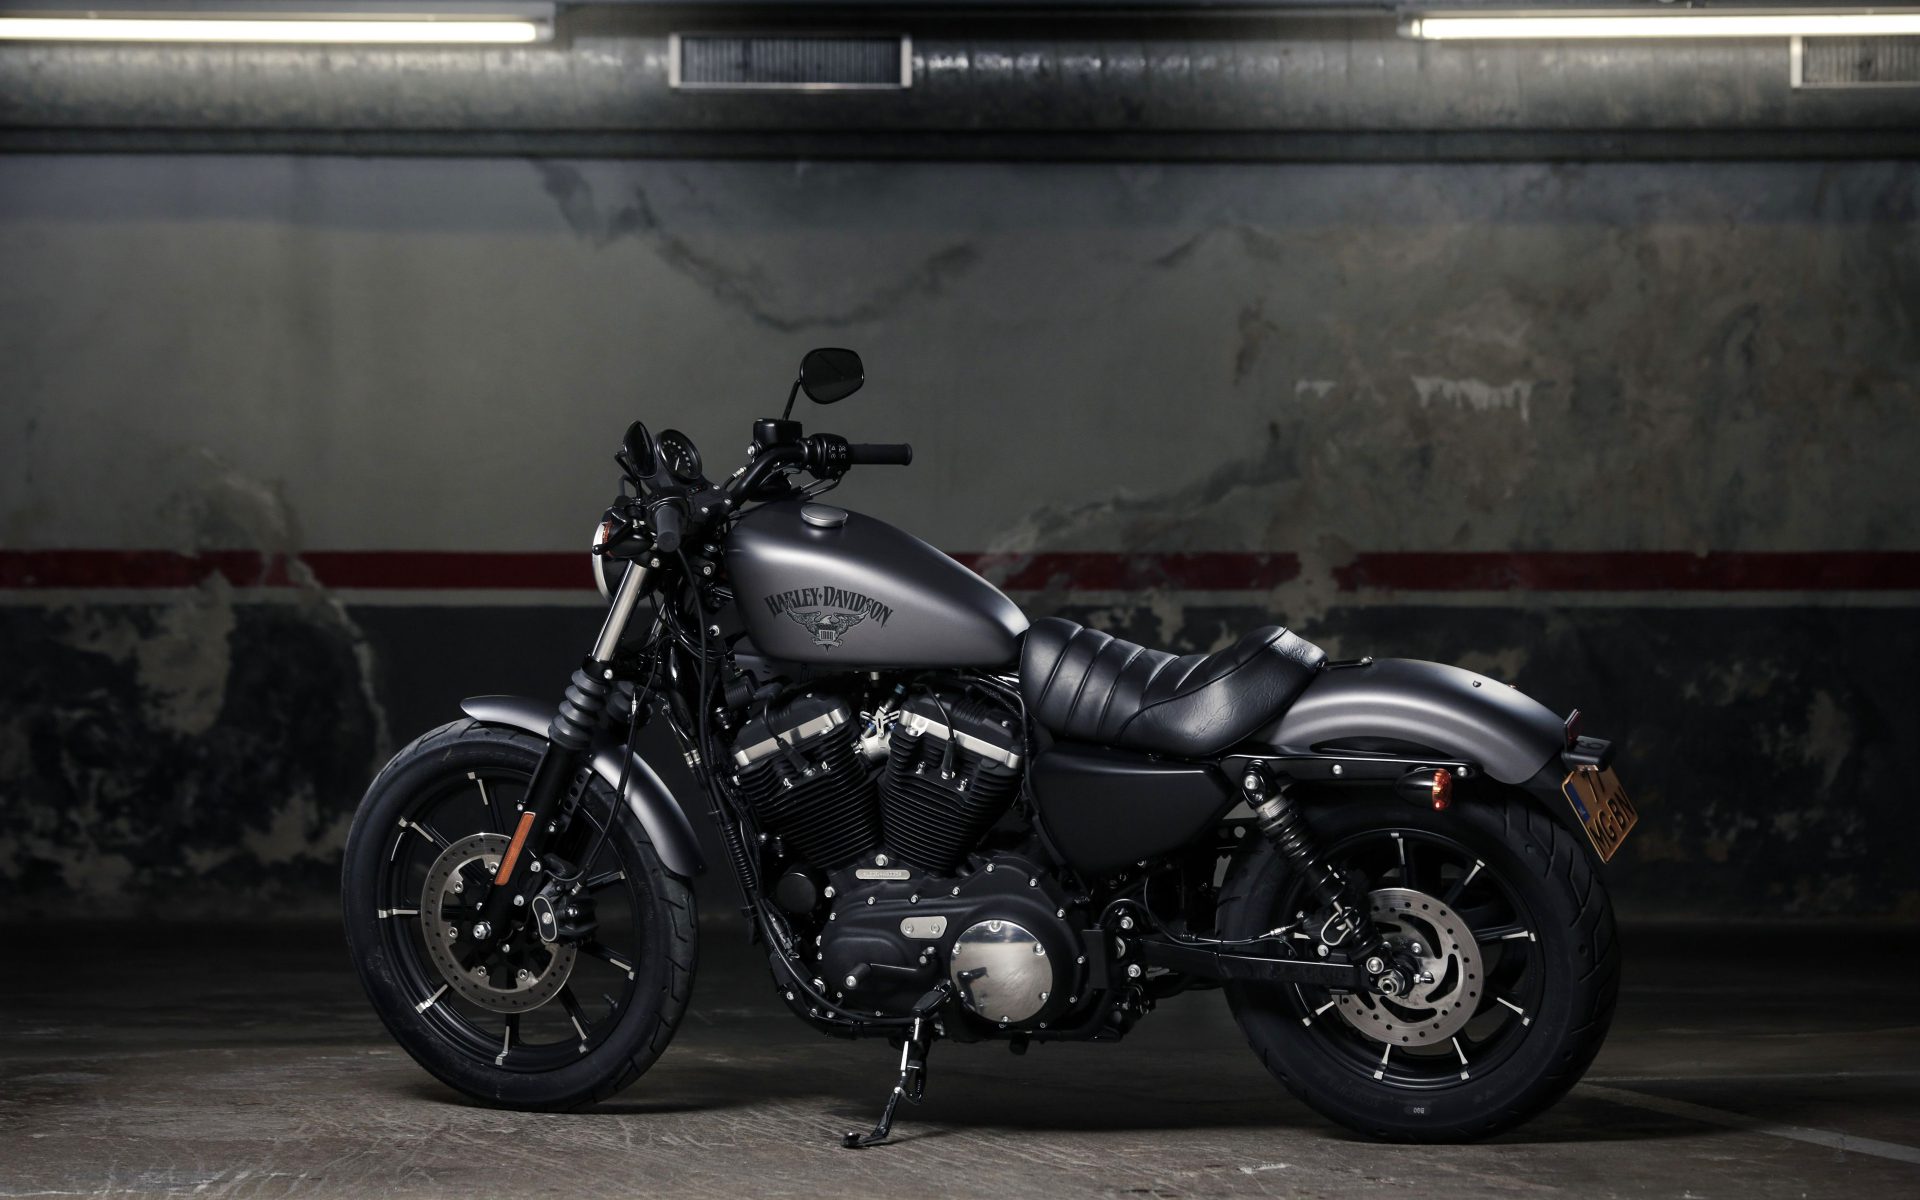 Oshe Vednzh Reorganizirajte Viskozen Vendita Moto Usate Harley Davidson Amazon Routingcostadaurada Com